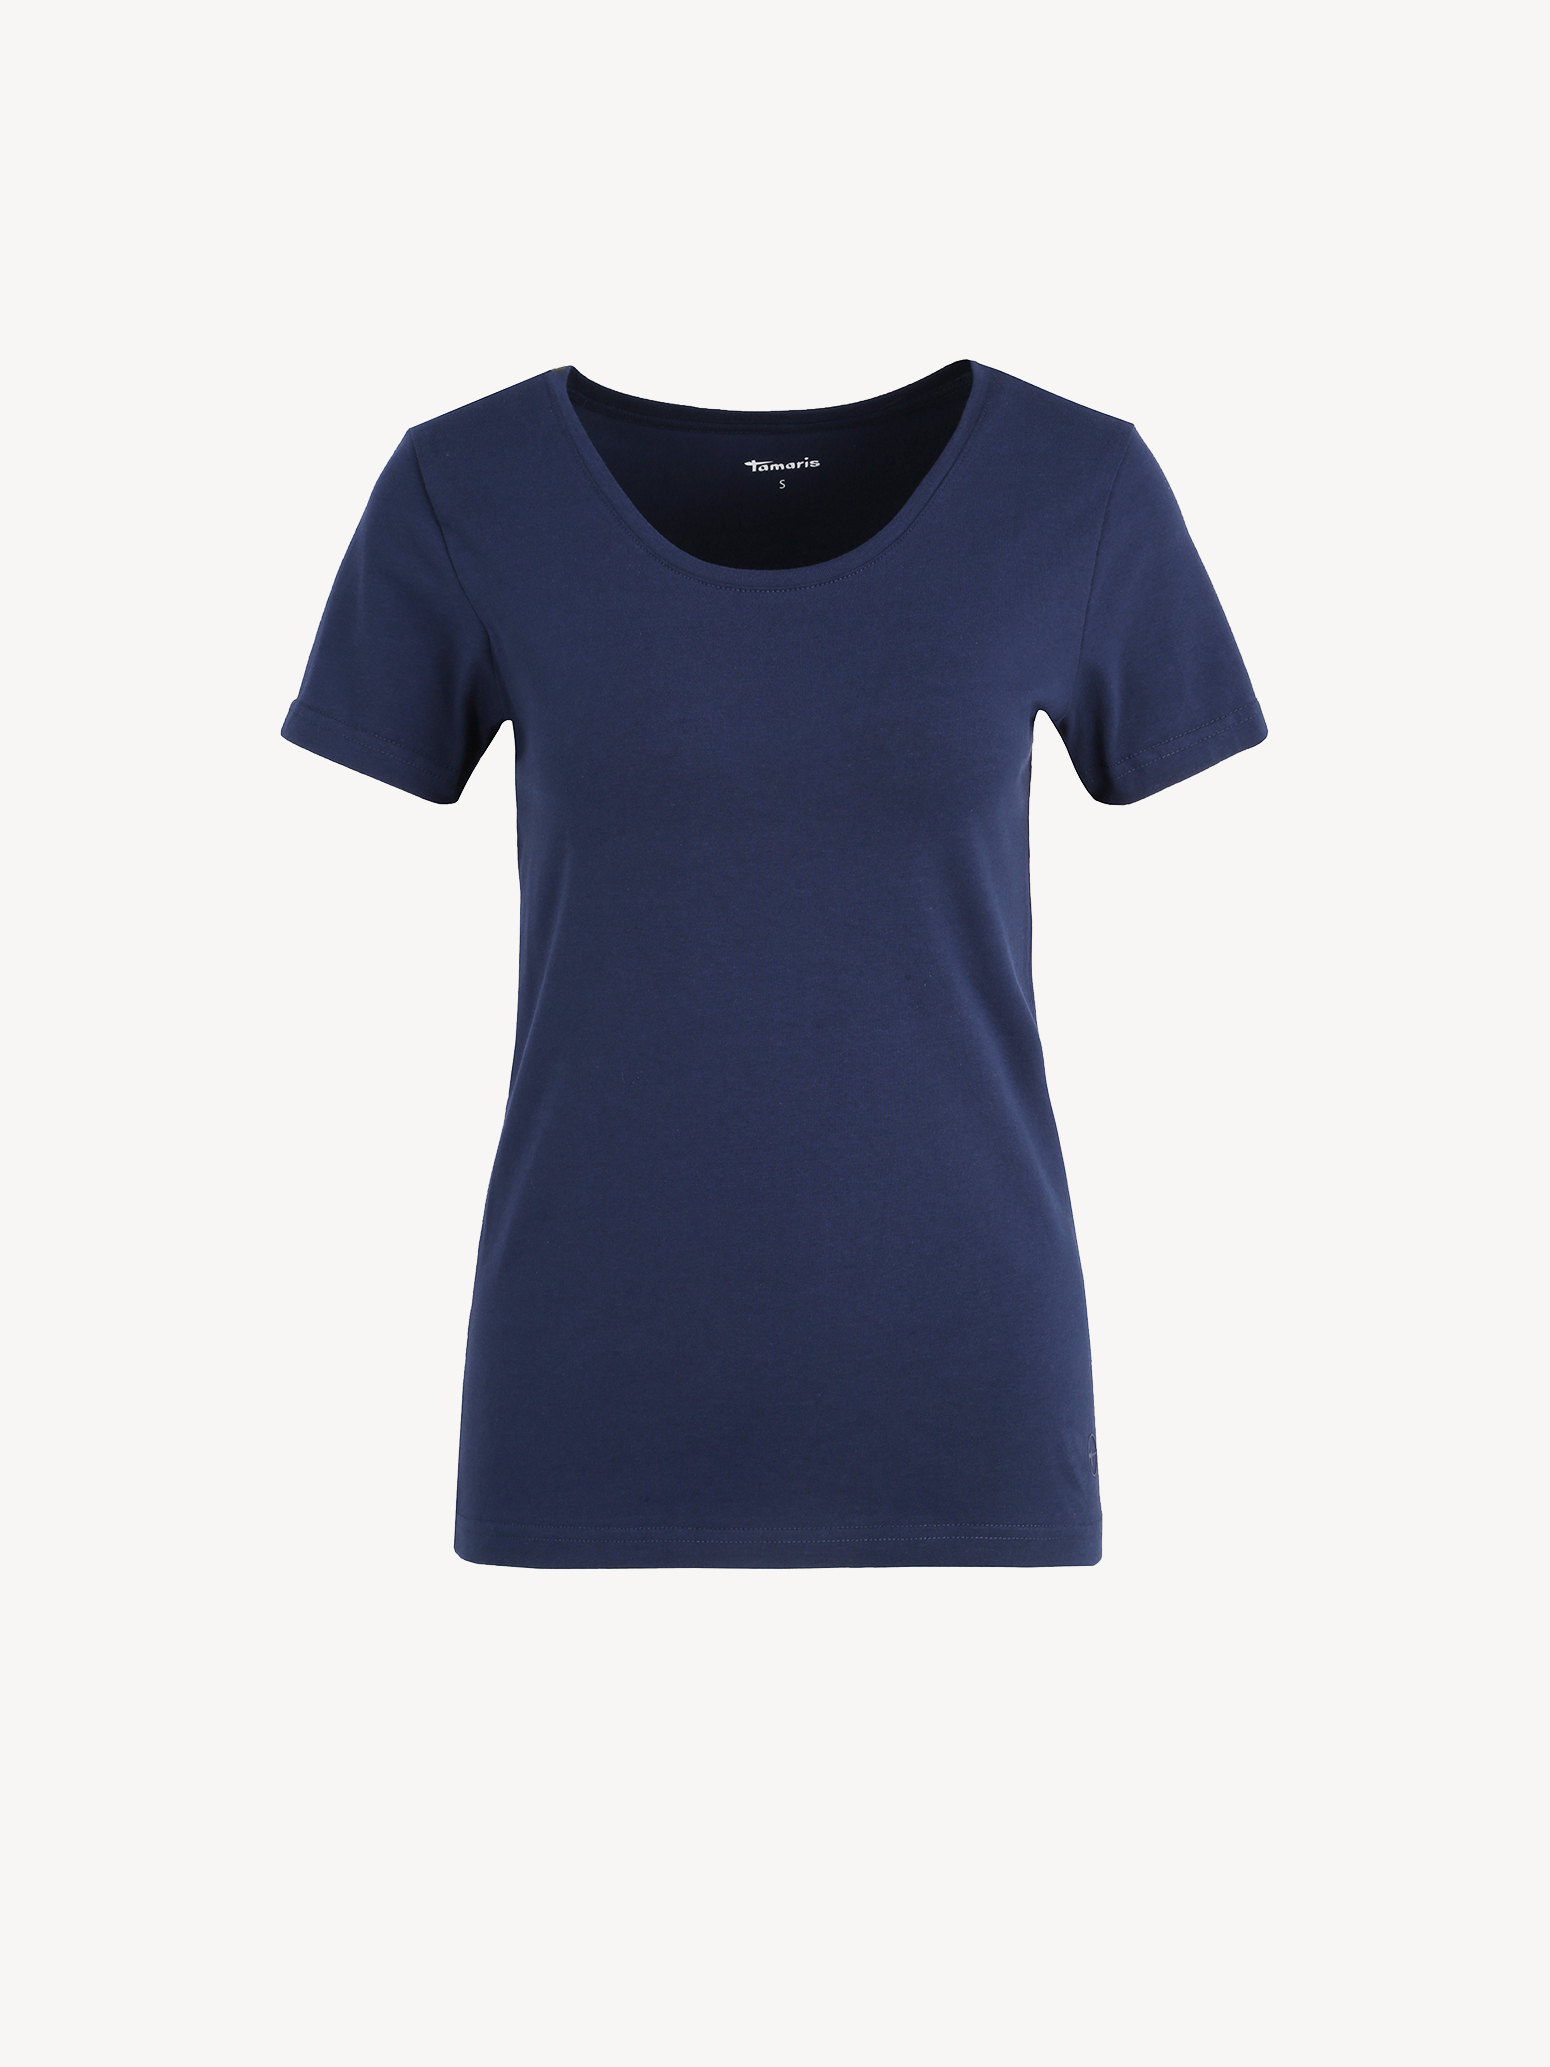 Tamaris Clothing online Buy now!